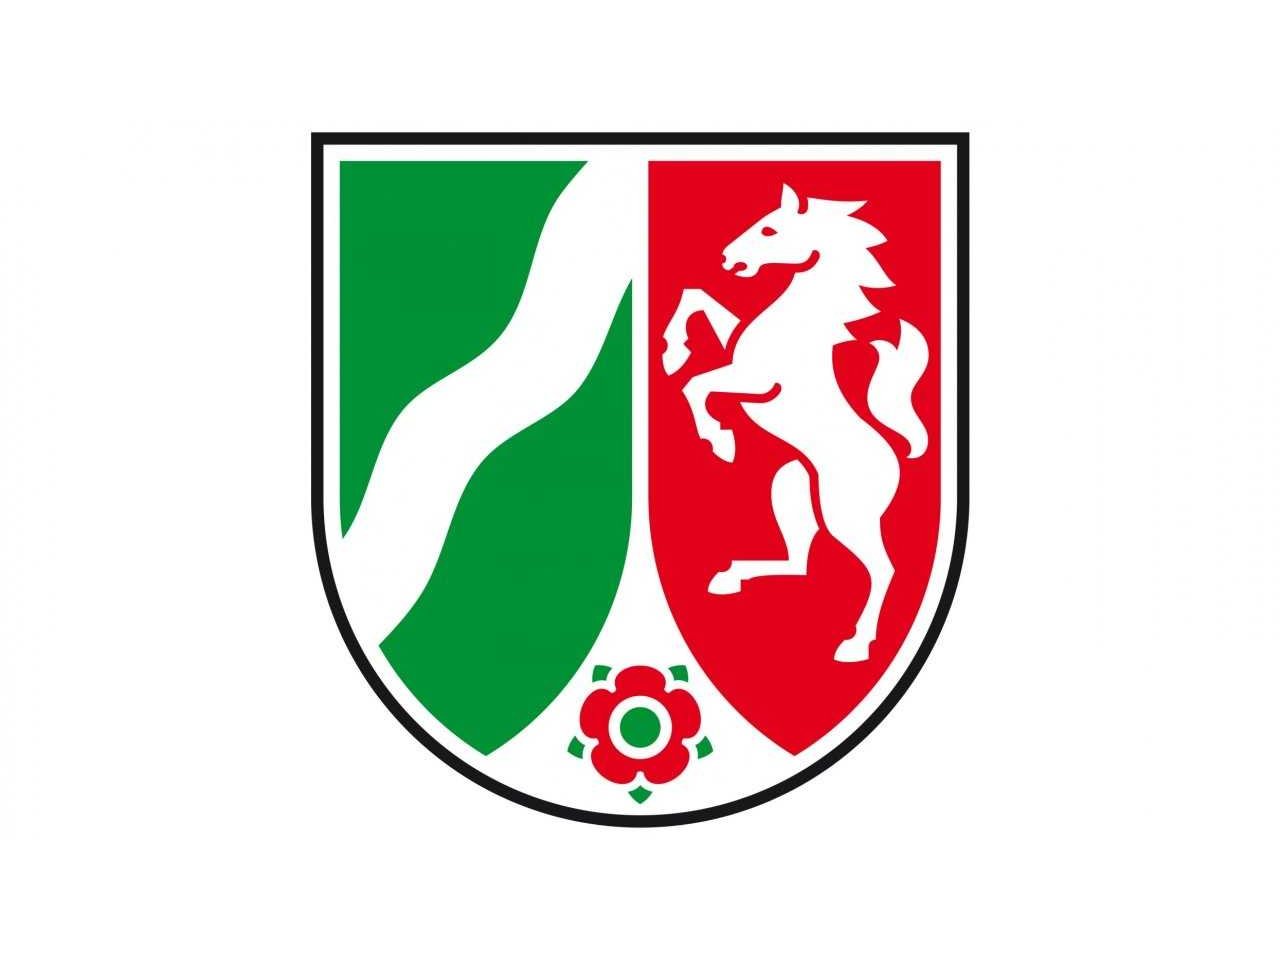 Wappen des Anbieters: Bezirksregierung Düsseldorf-